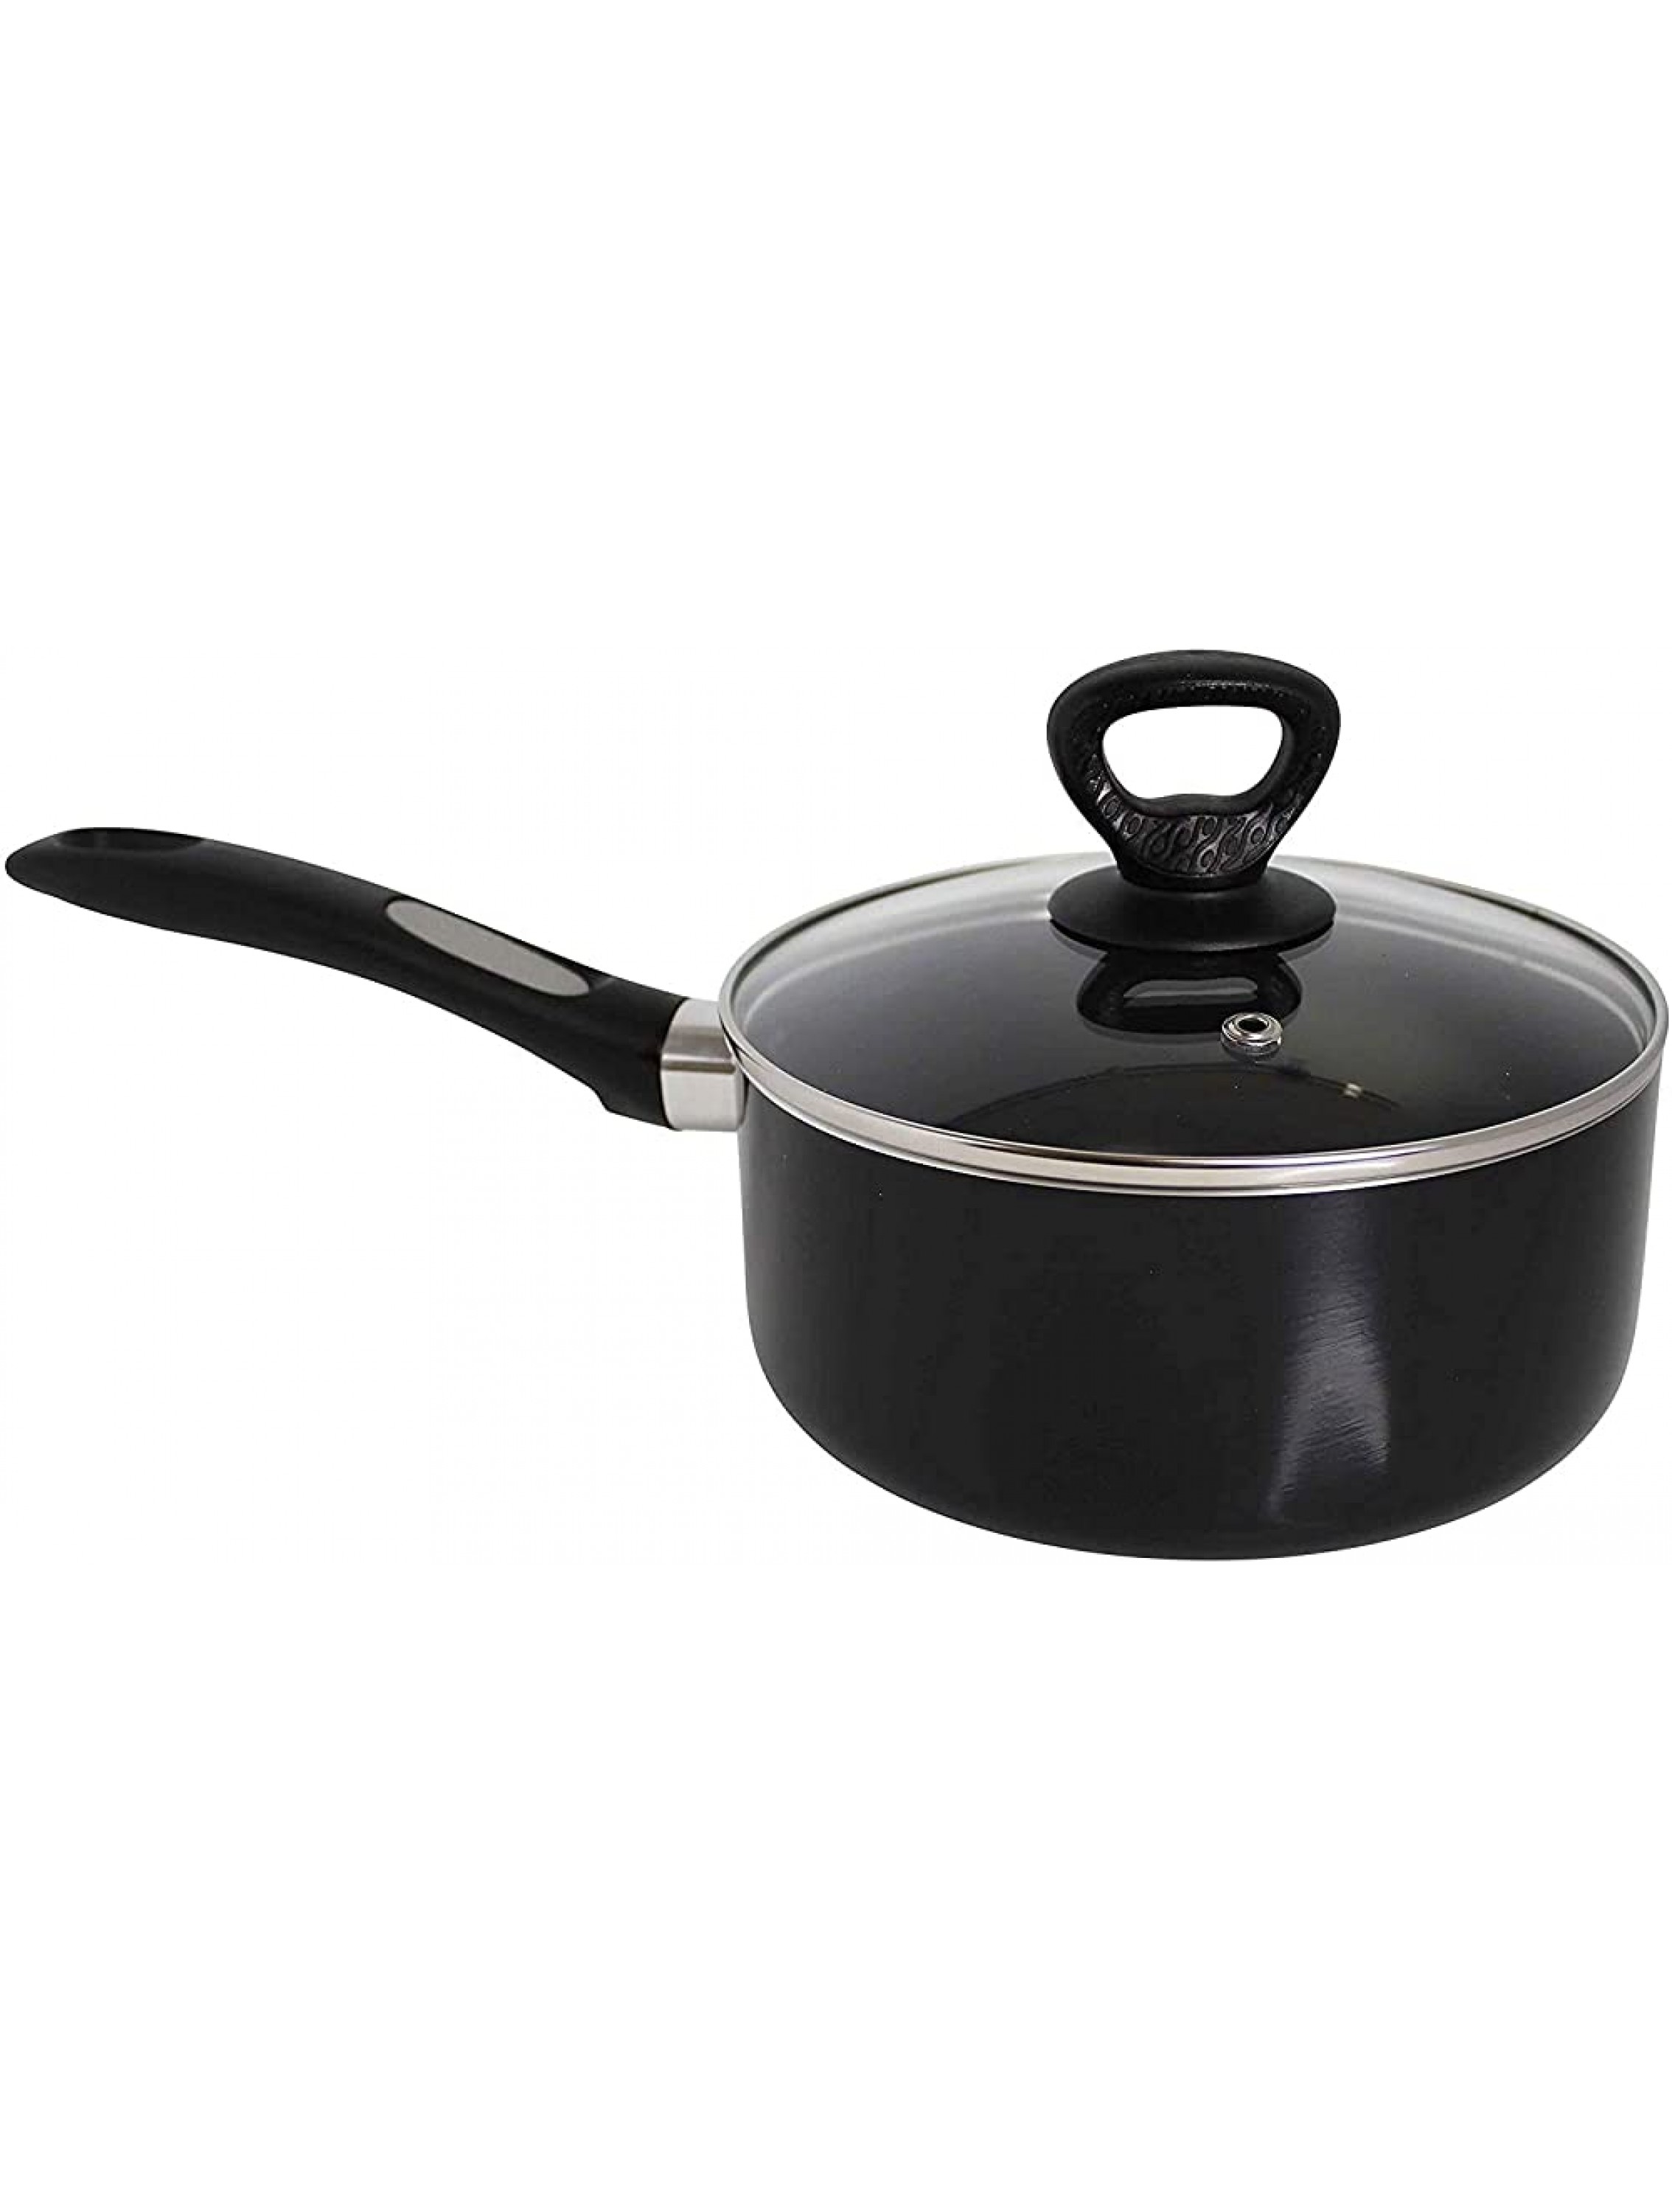 Mirro A79721 Get A Grip Aluminum Nonstick Sauce Pan with Glass Lid Cover Cookware 1-Quart Black - - BL3VCYH1U